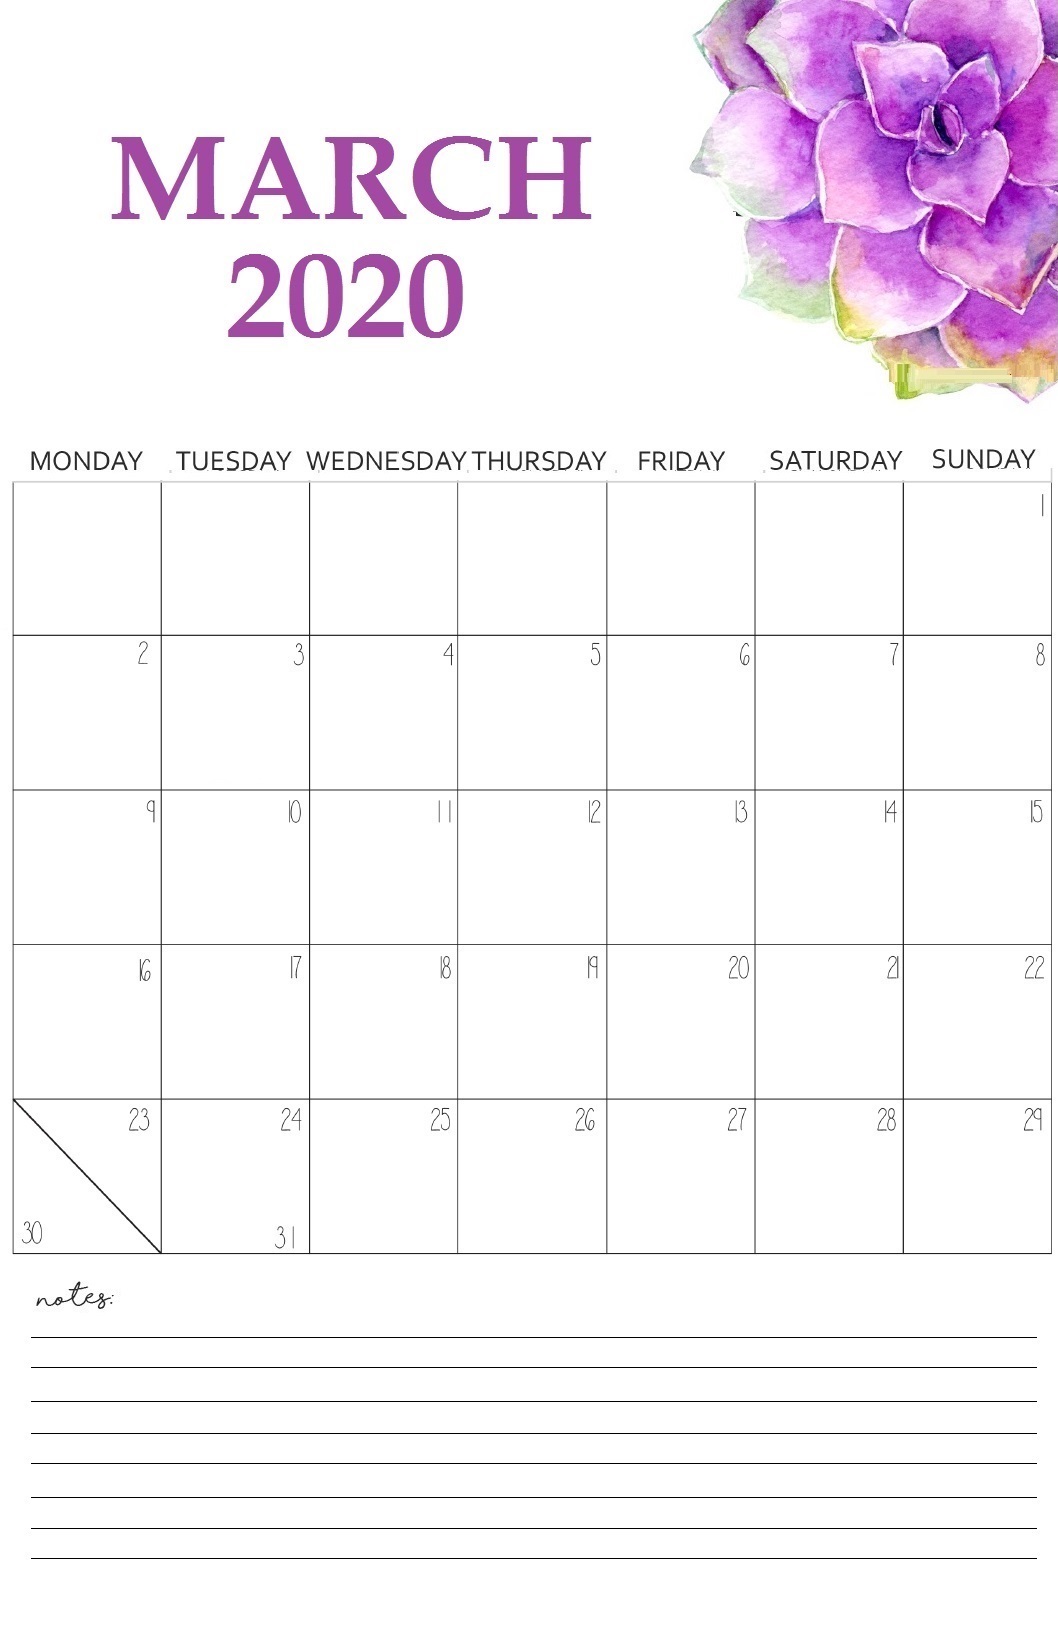 March 2020 Wall Calendar